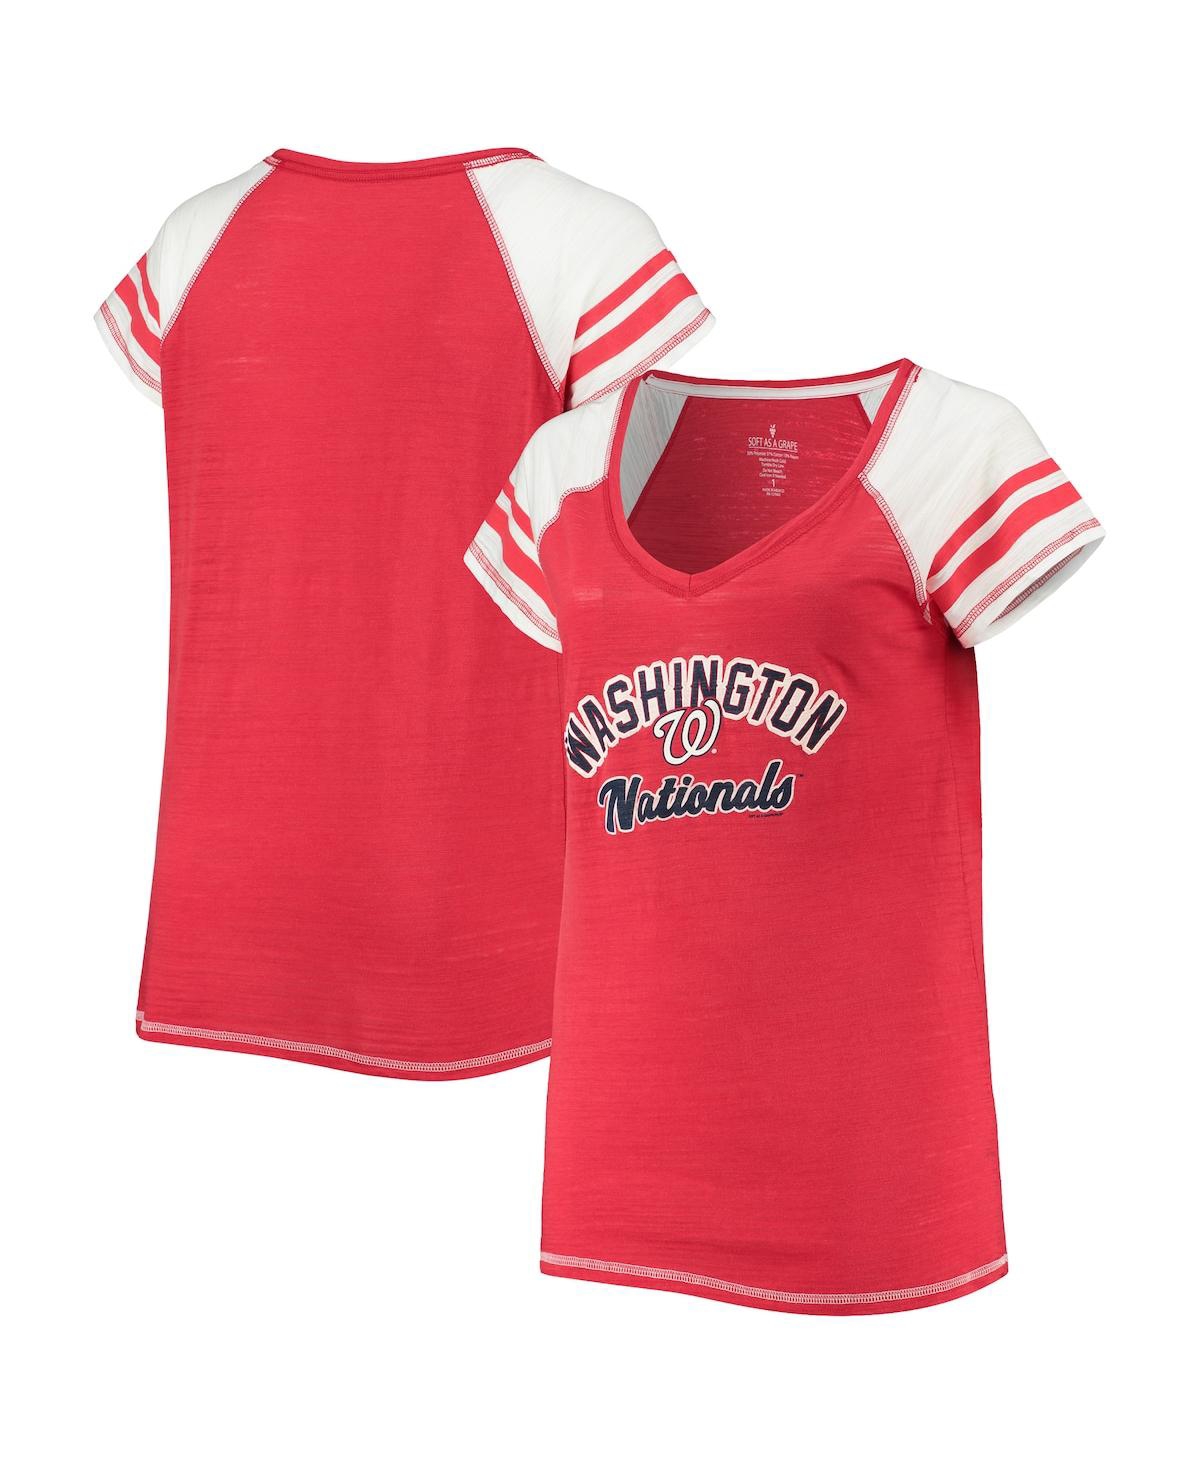 Women's Soft as a Grape Red Washington Nationals Curvy Colorblock Tri-Blend Raglan V-Neck T-shirt - Red